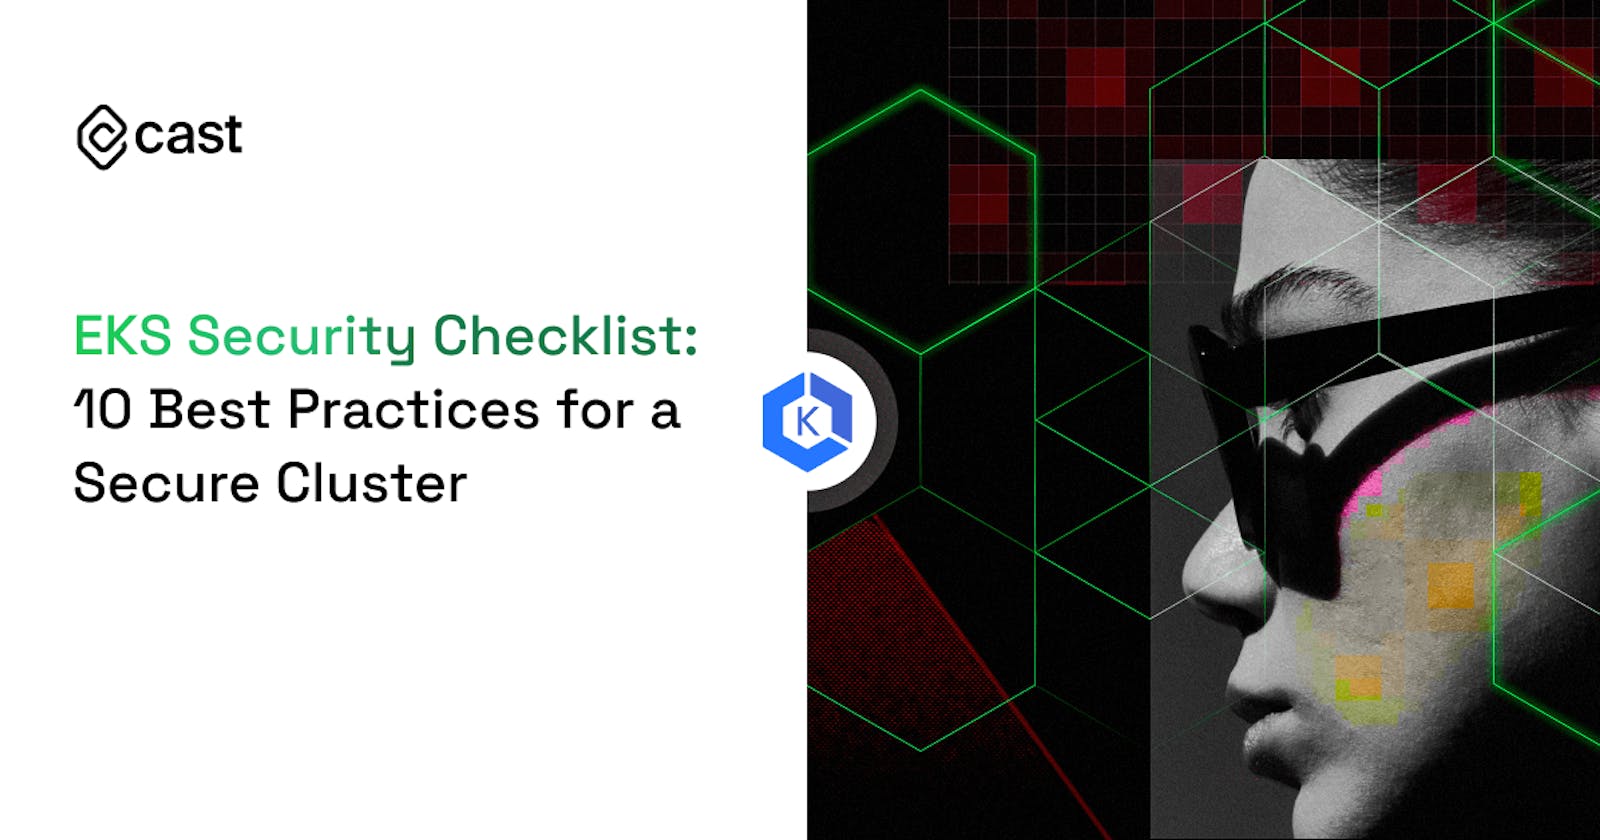 EKS Security Checklist: 10 Best Practices for a Secure Cluster